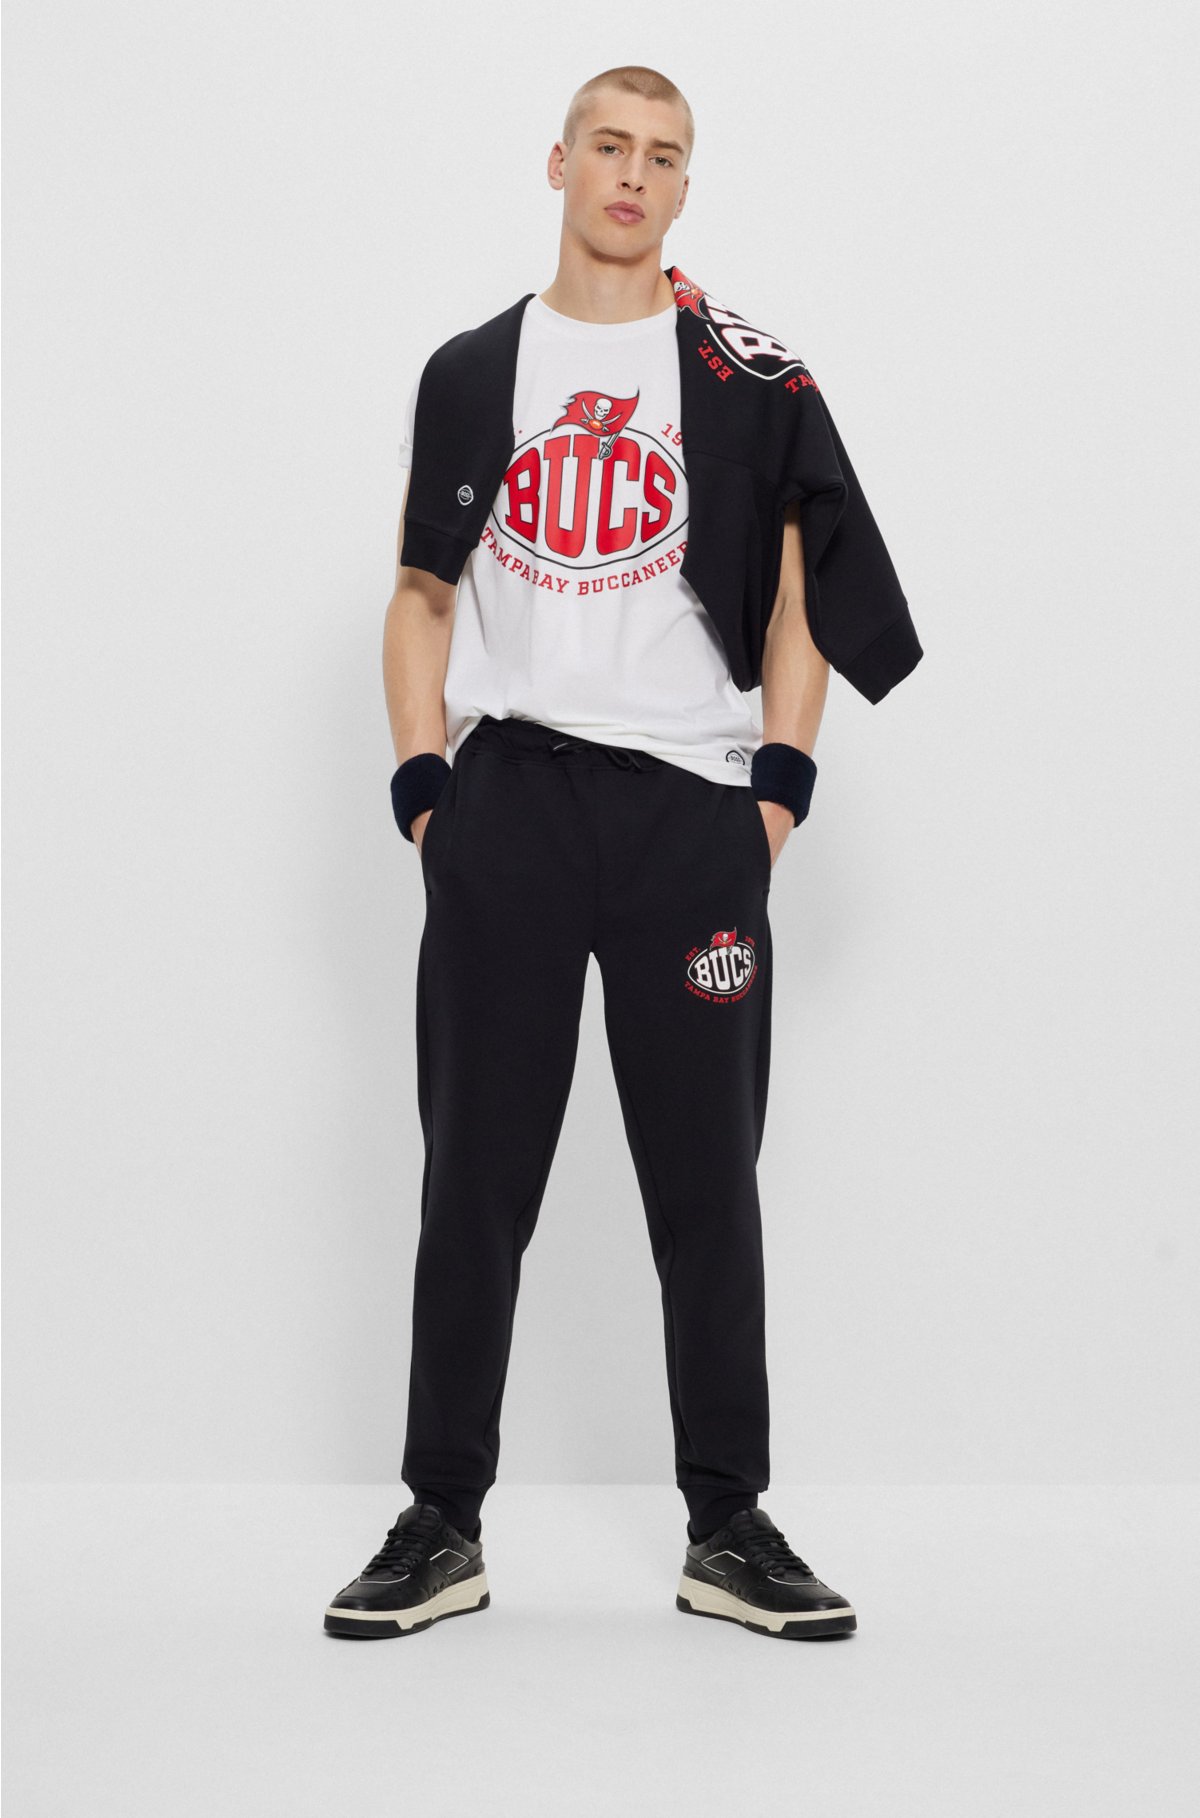  BOSS x NFL stretch-cotton T-shirt with collaborative branding, Bucs